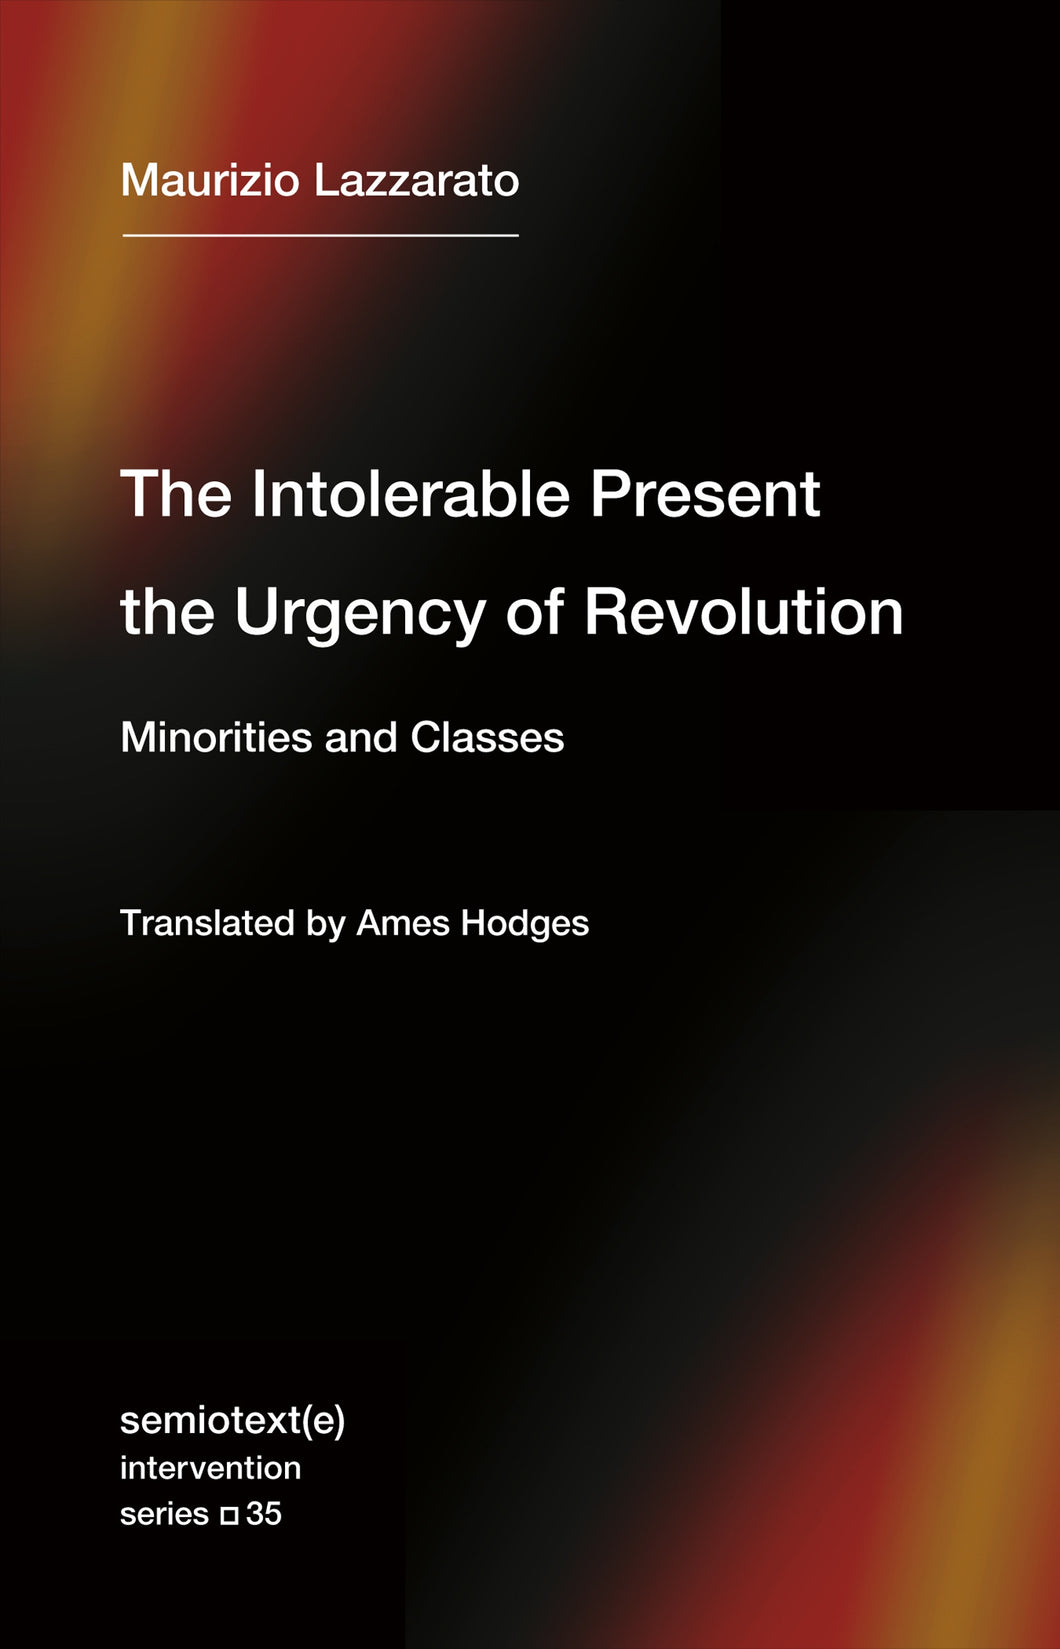 The Intolerable Present, the Urgency of Revolution : Minorities and Classes ร้านหนังสือและสิ่งของ เป็นร้านหนังสือภาษาอังกฤษหายาก และร้านกาแฟ หรือ บุ๊คคาเฟ่ ตั้งอยู่สุขุมวิท กรุงเทพ